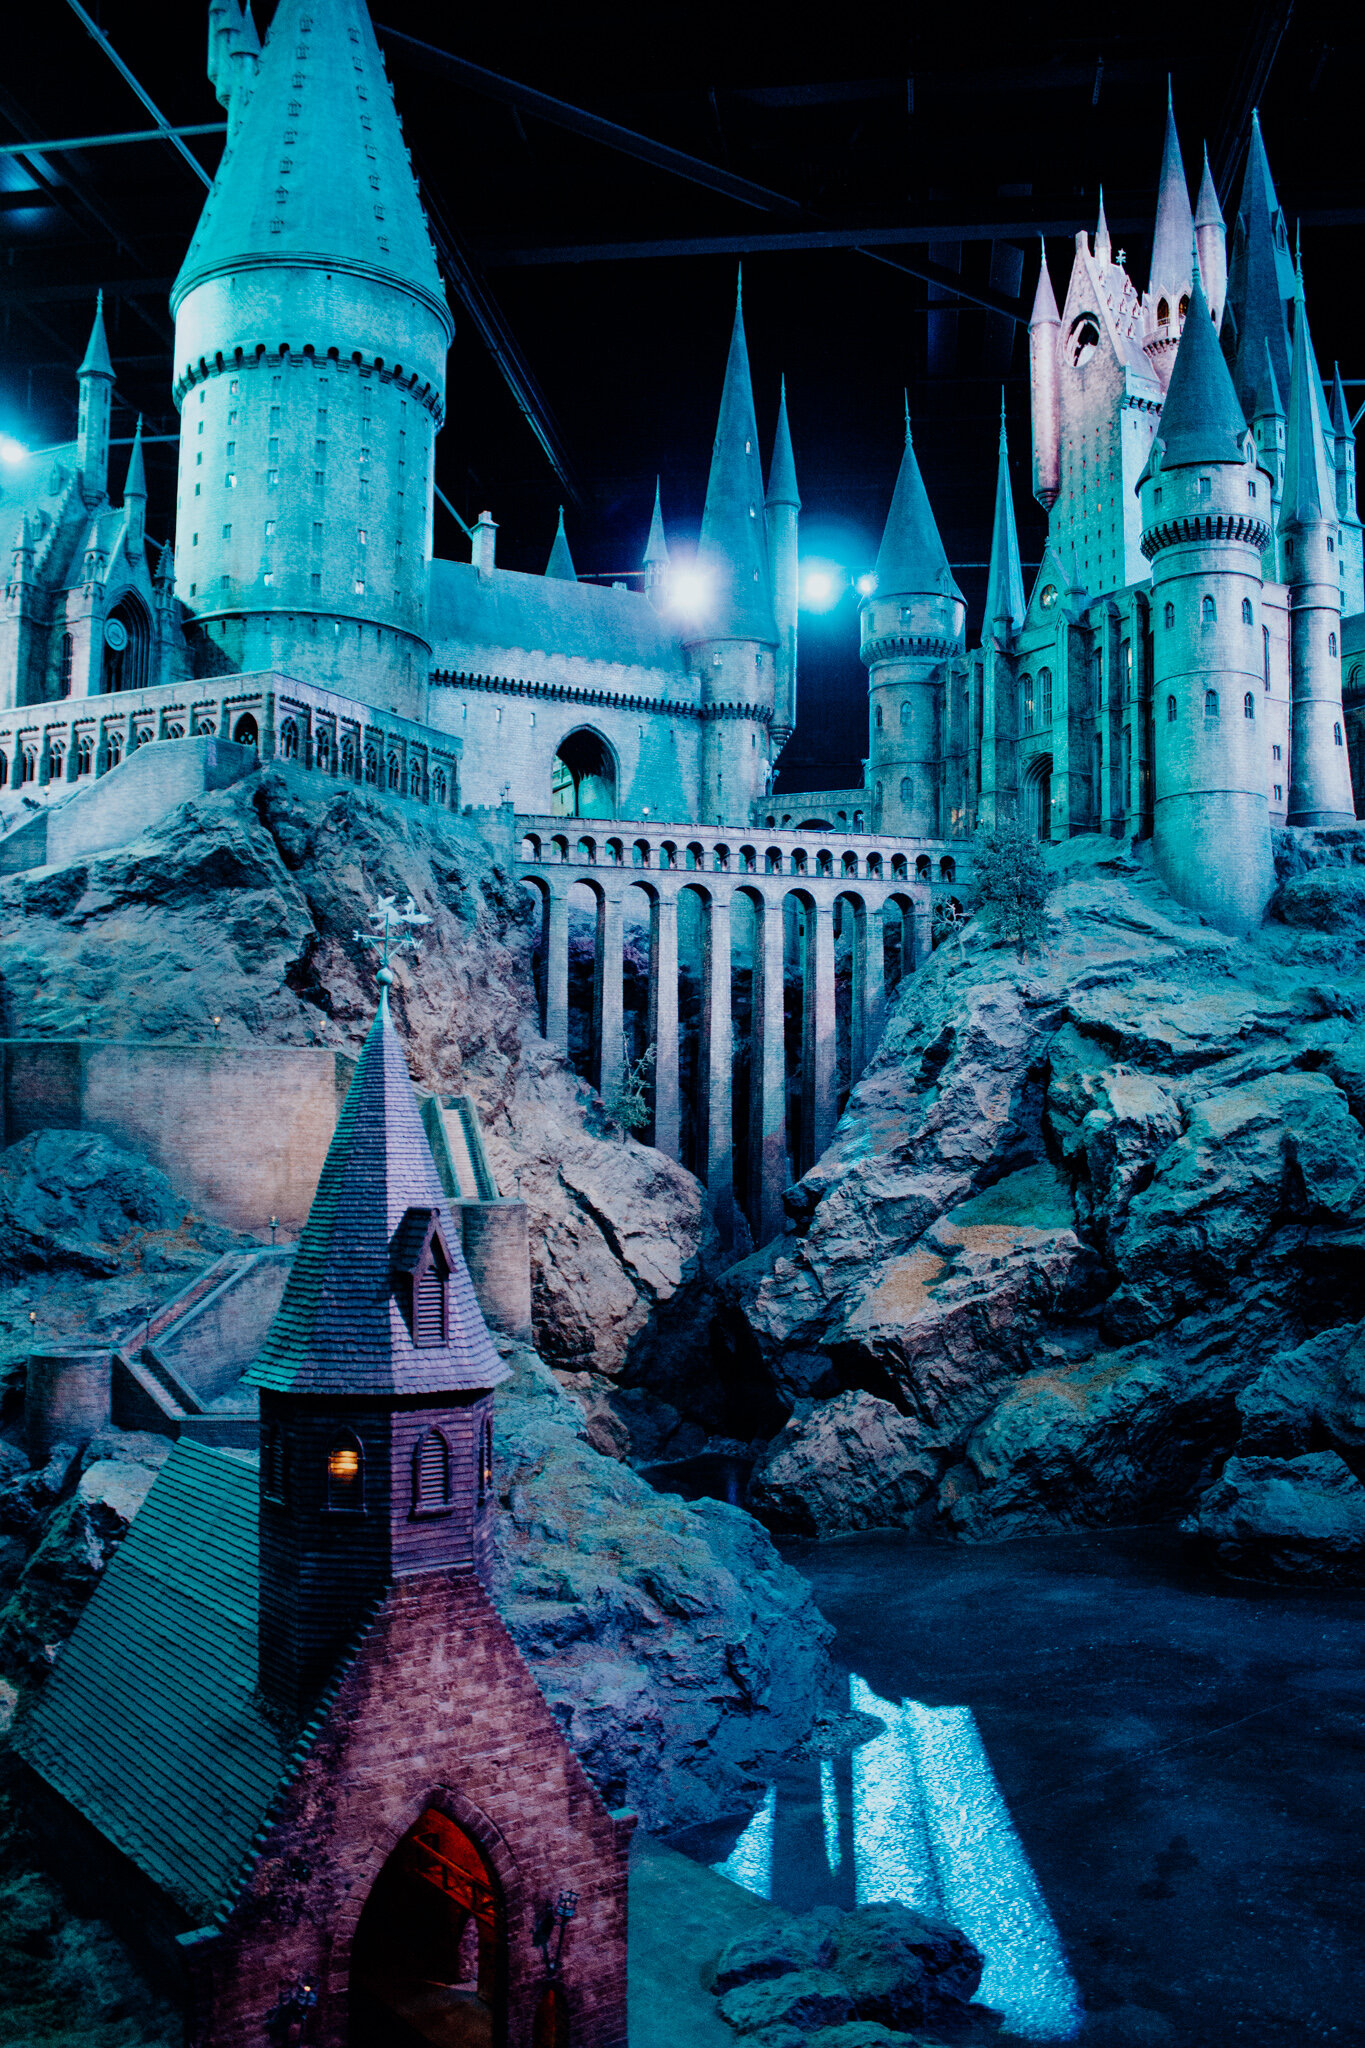 Hogwarts Castle at Harry Potter Studios in the UK